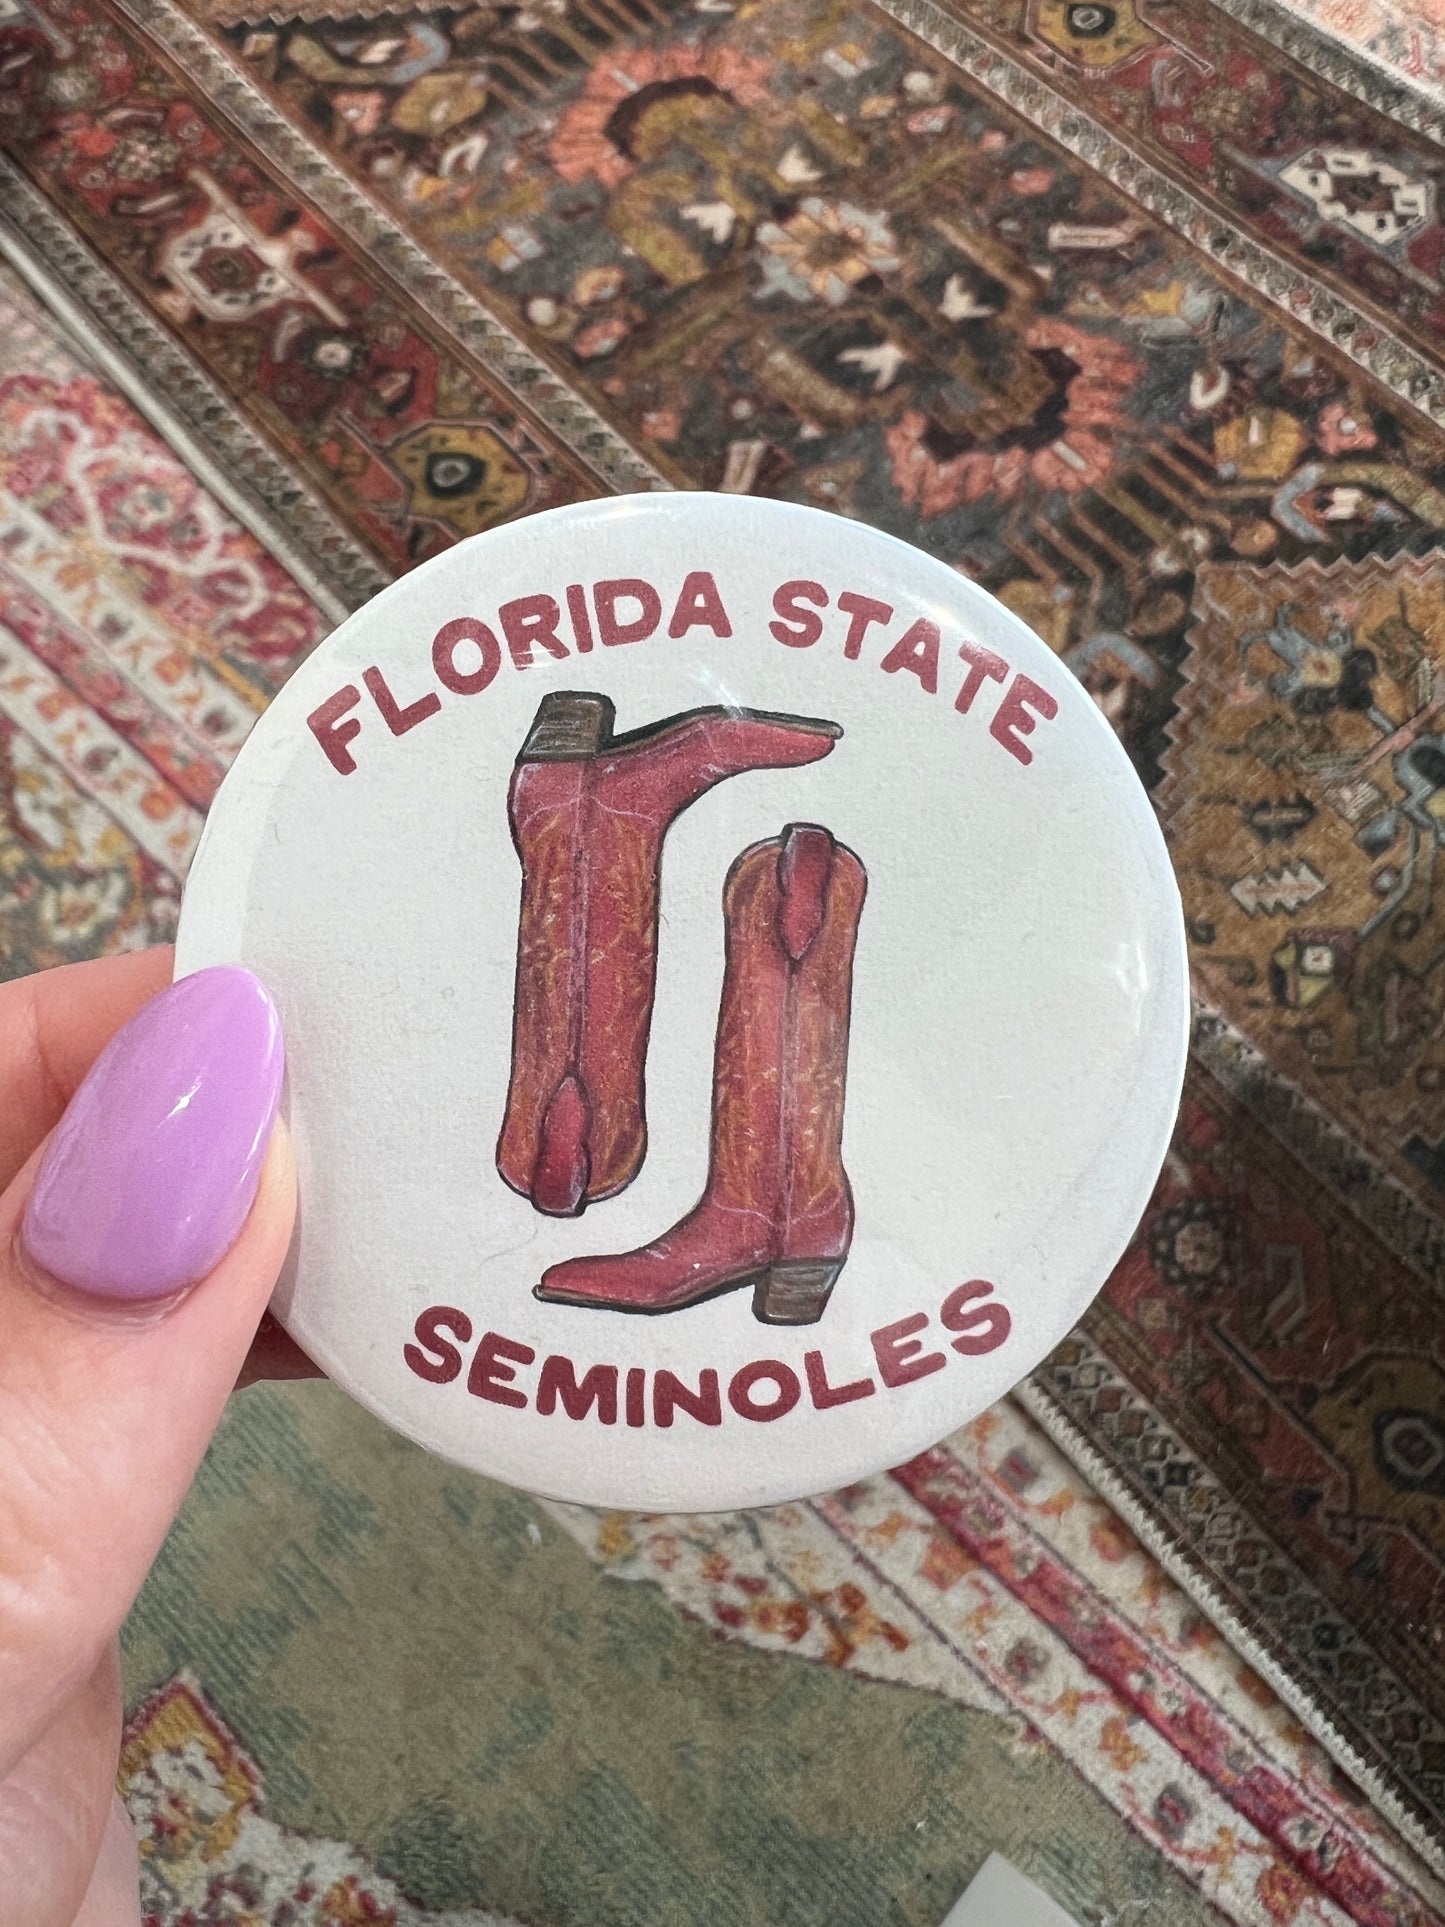 Florida State Seminoles button